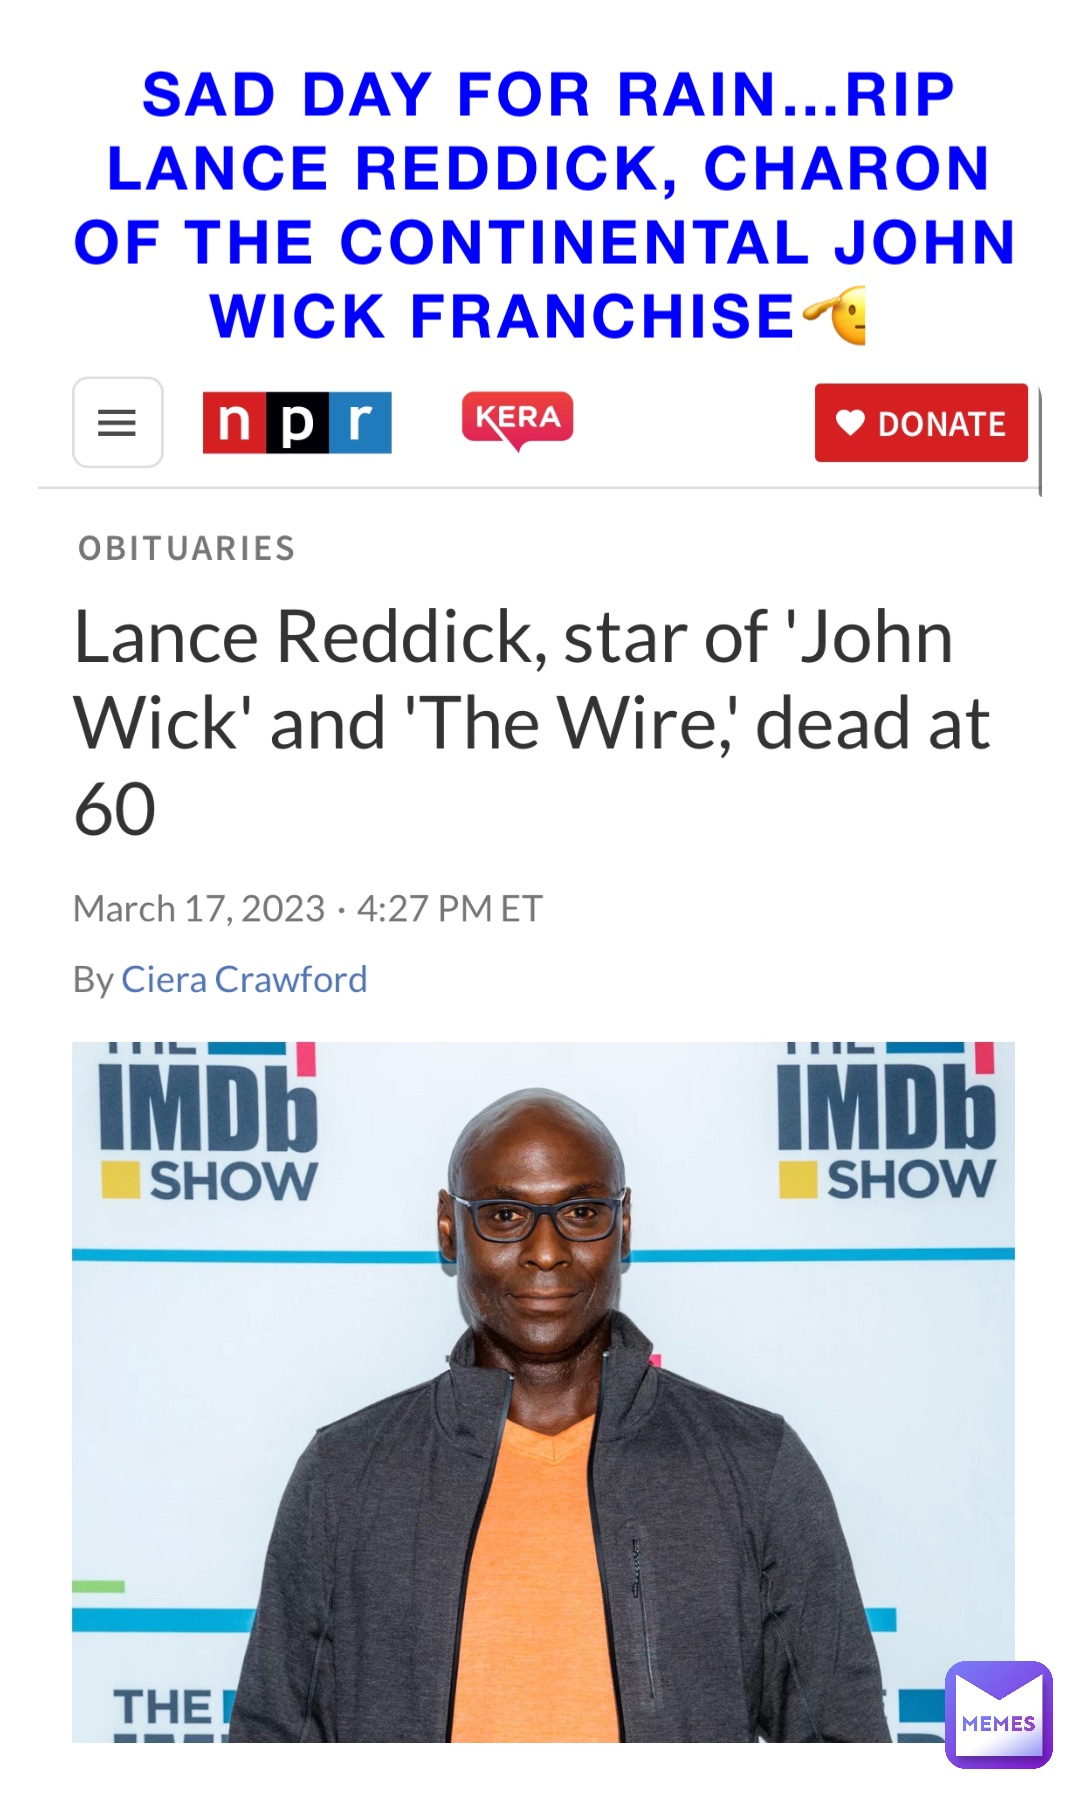 Sad day for rain…RIP Lance Reddick, Charon of The Continental John Wick franchise🫡